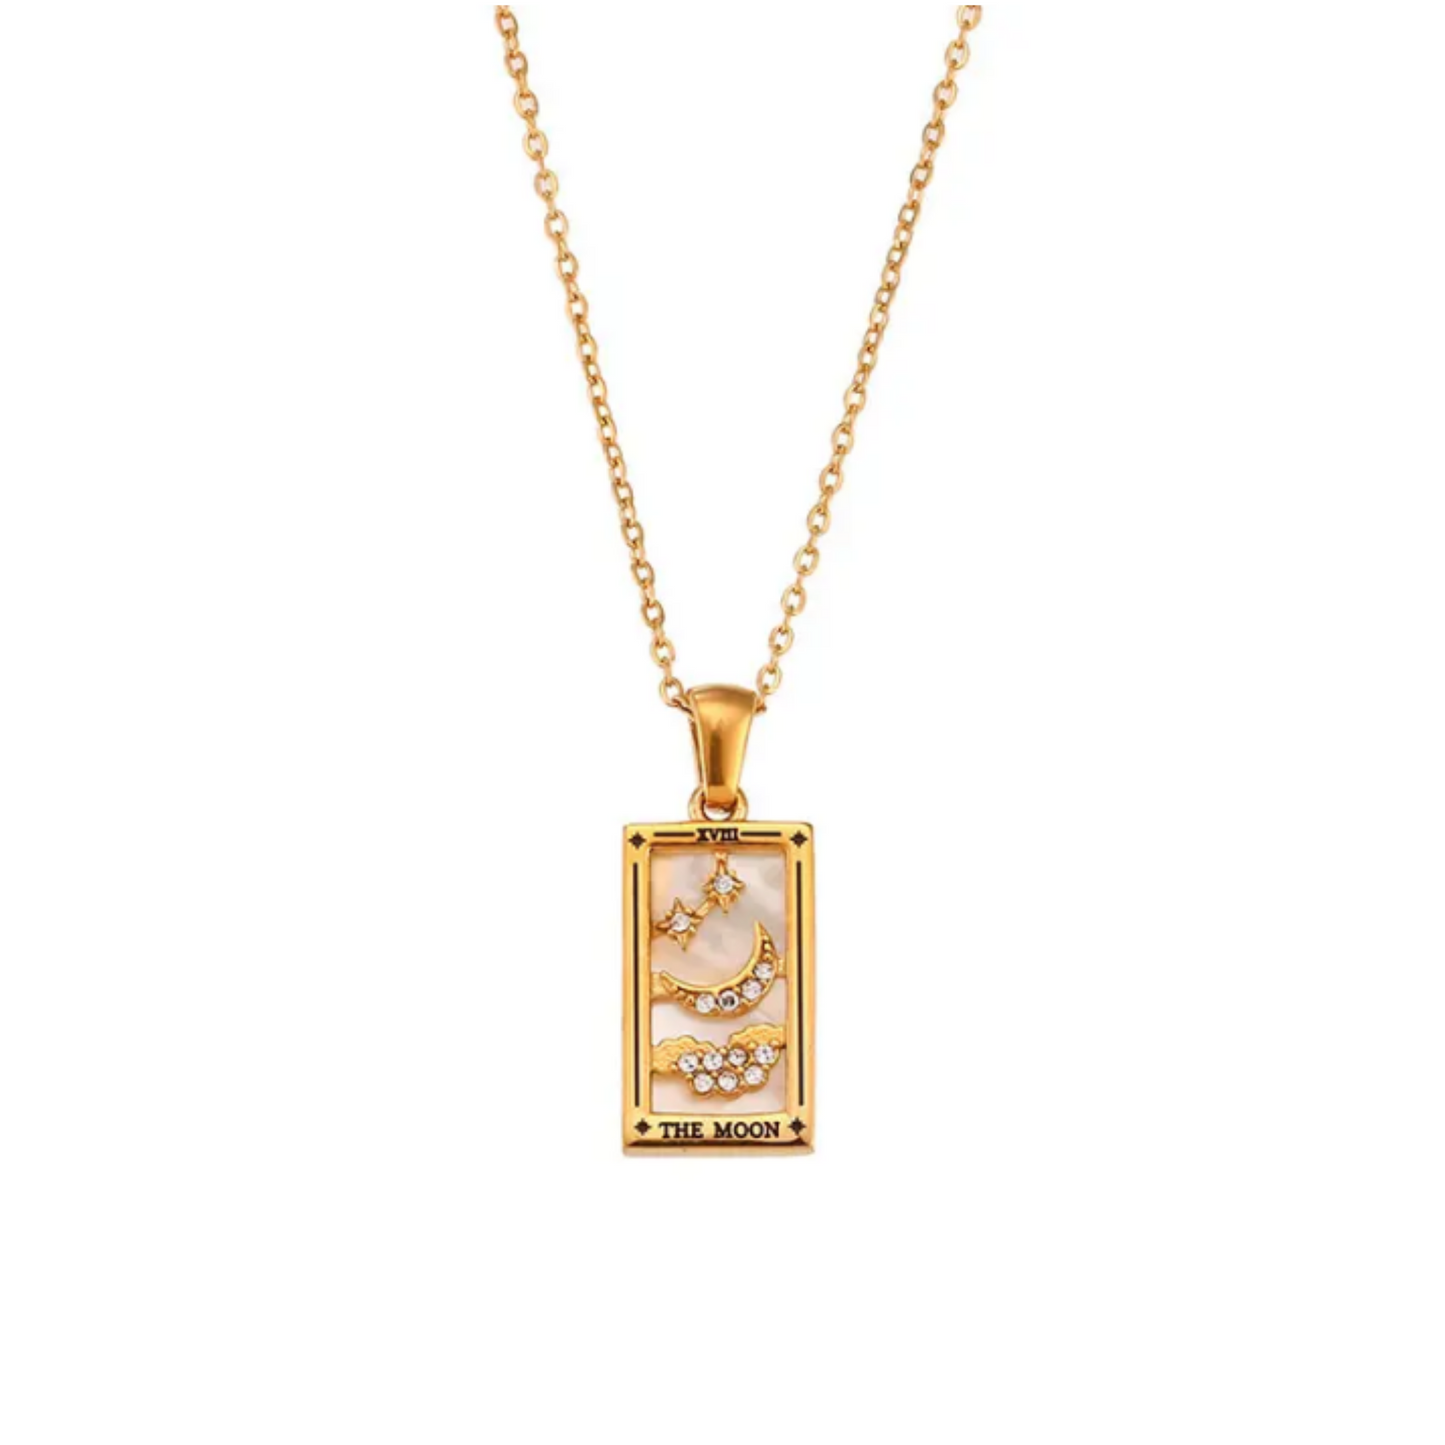 The Empress 18K Gold Plated Tarot Card Necklace